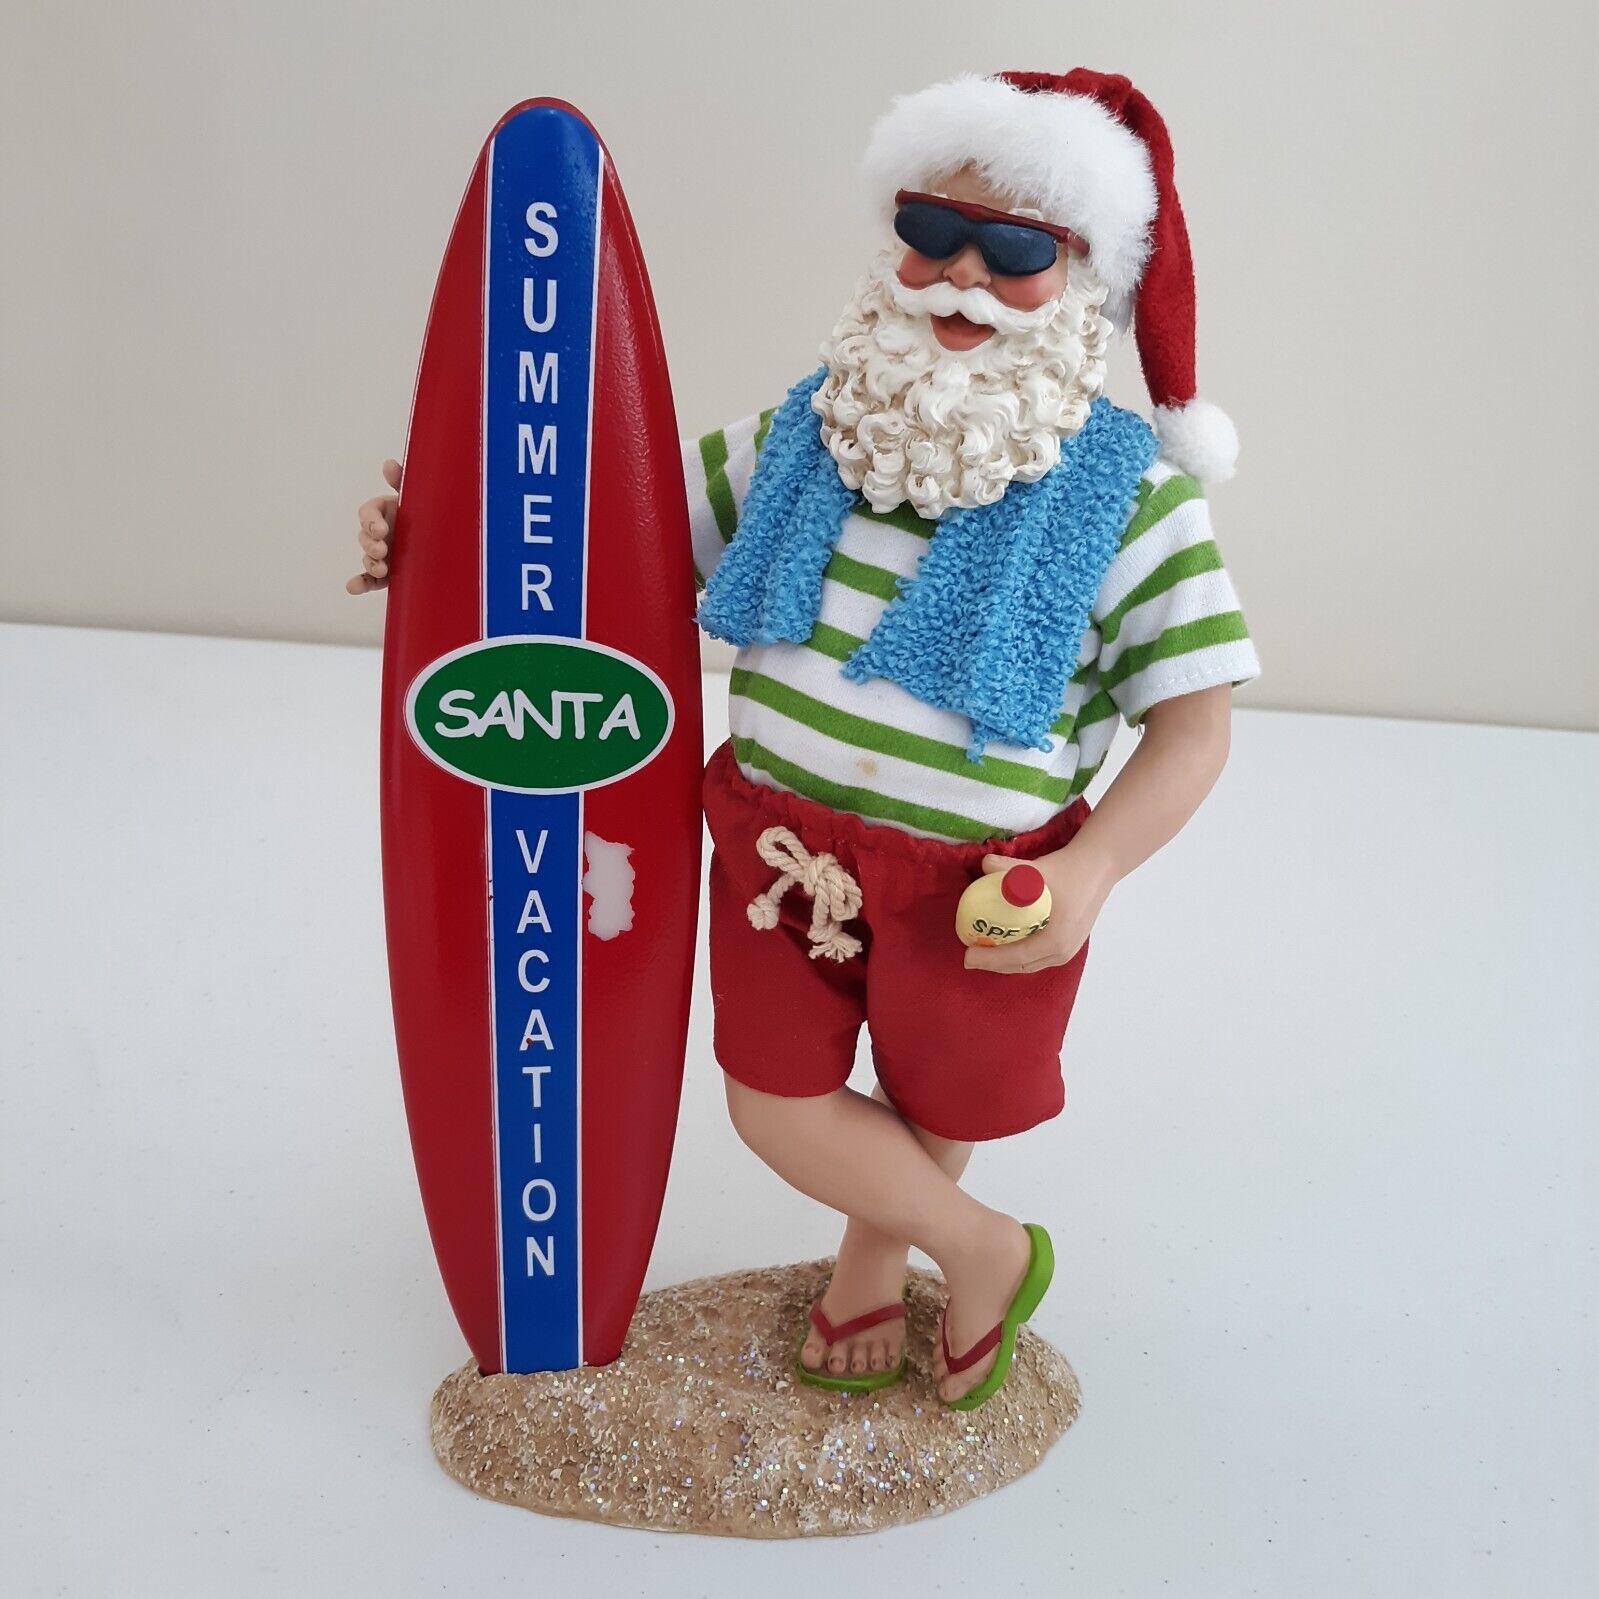 Kurt Adler Fabriche Summer Vacation Santa Claus Figurine Surfboard Beach Sand